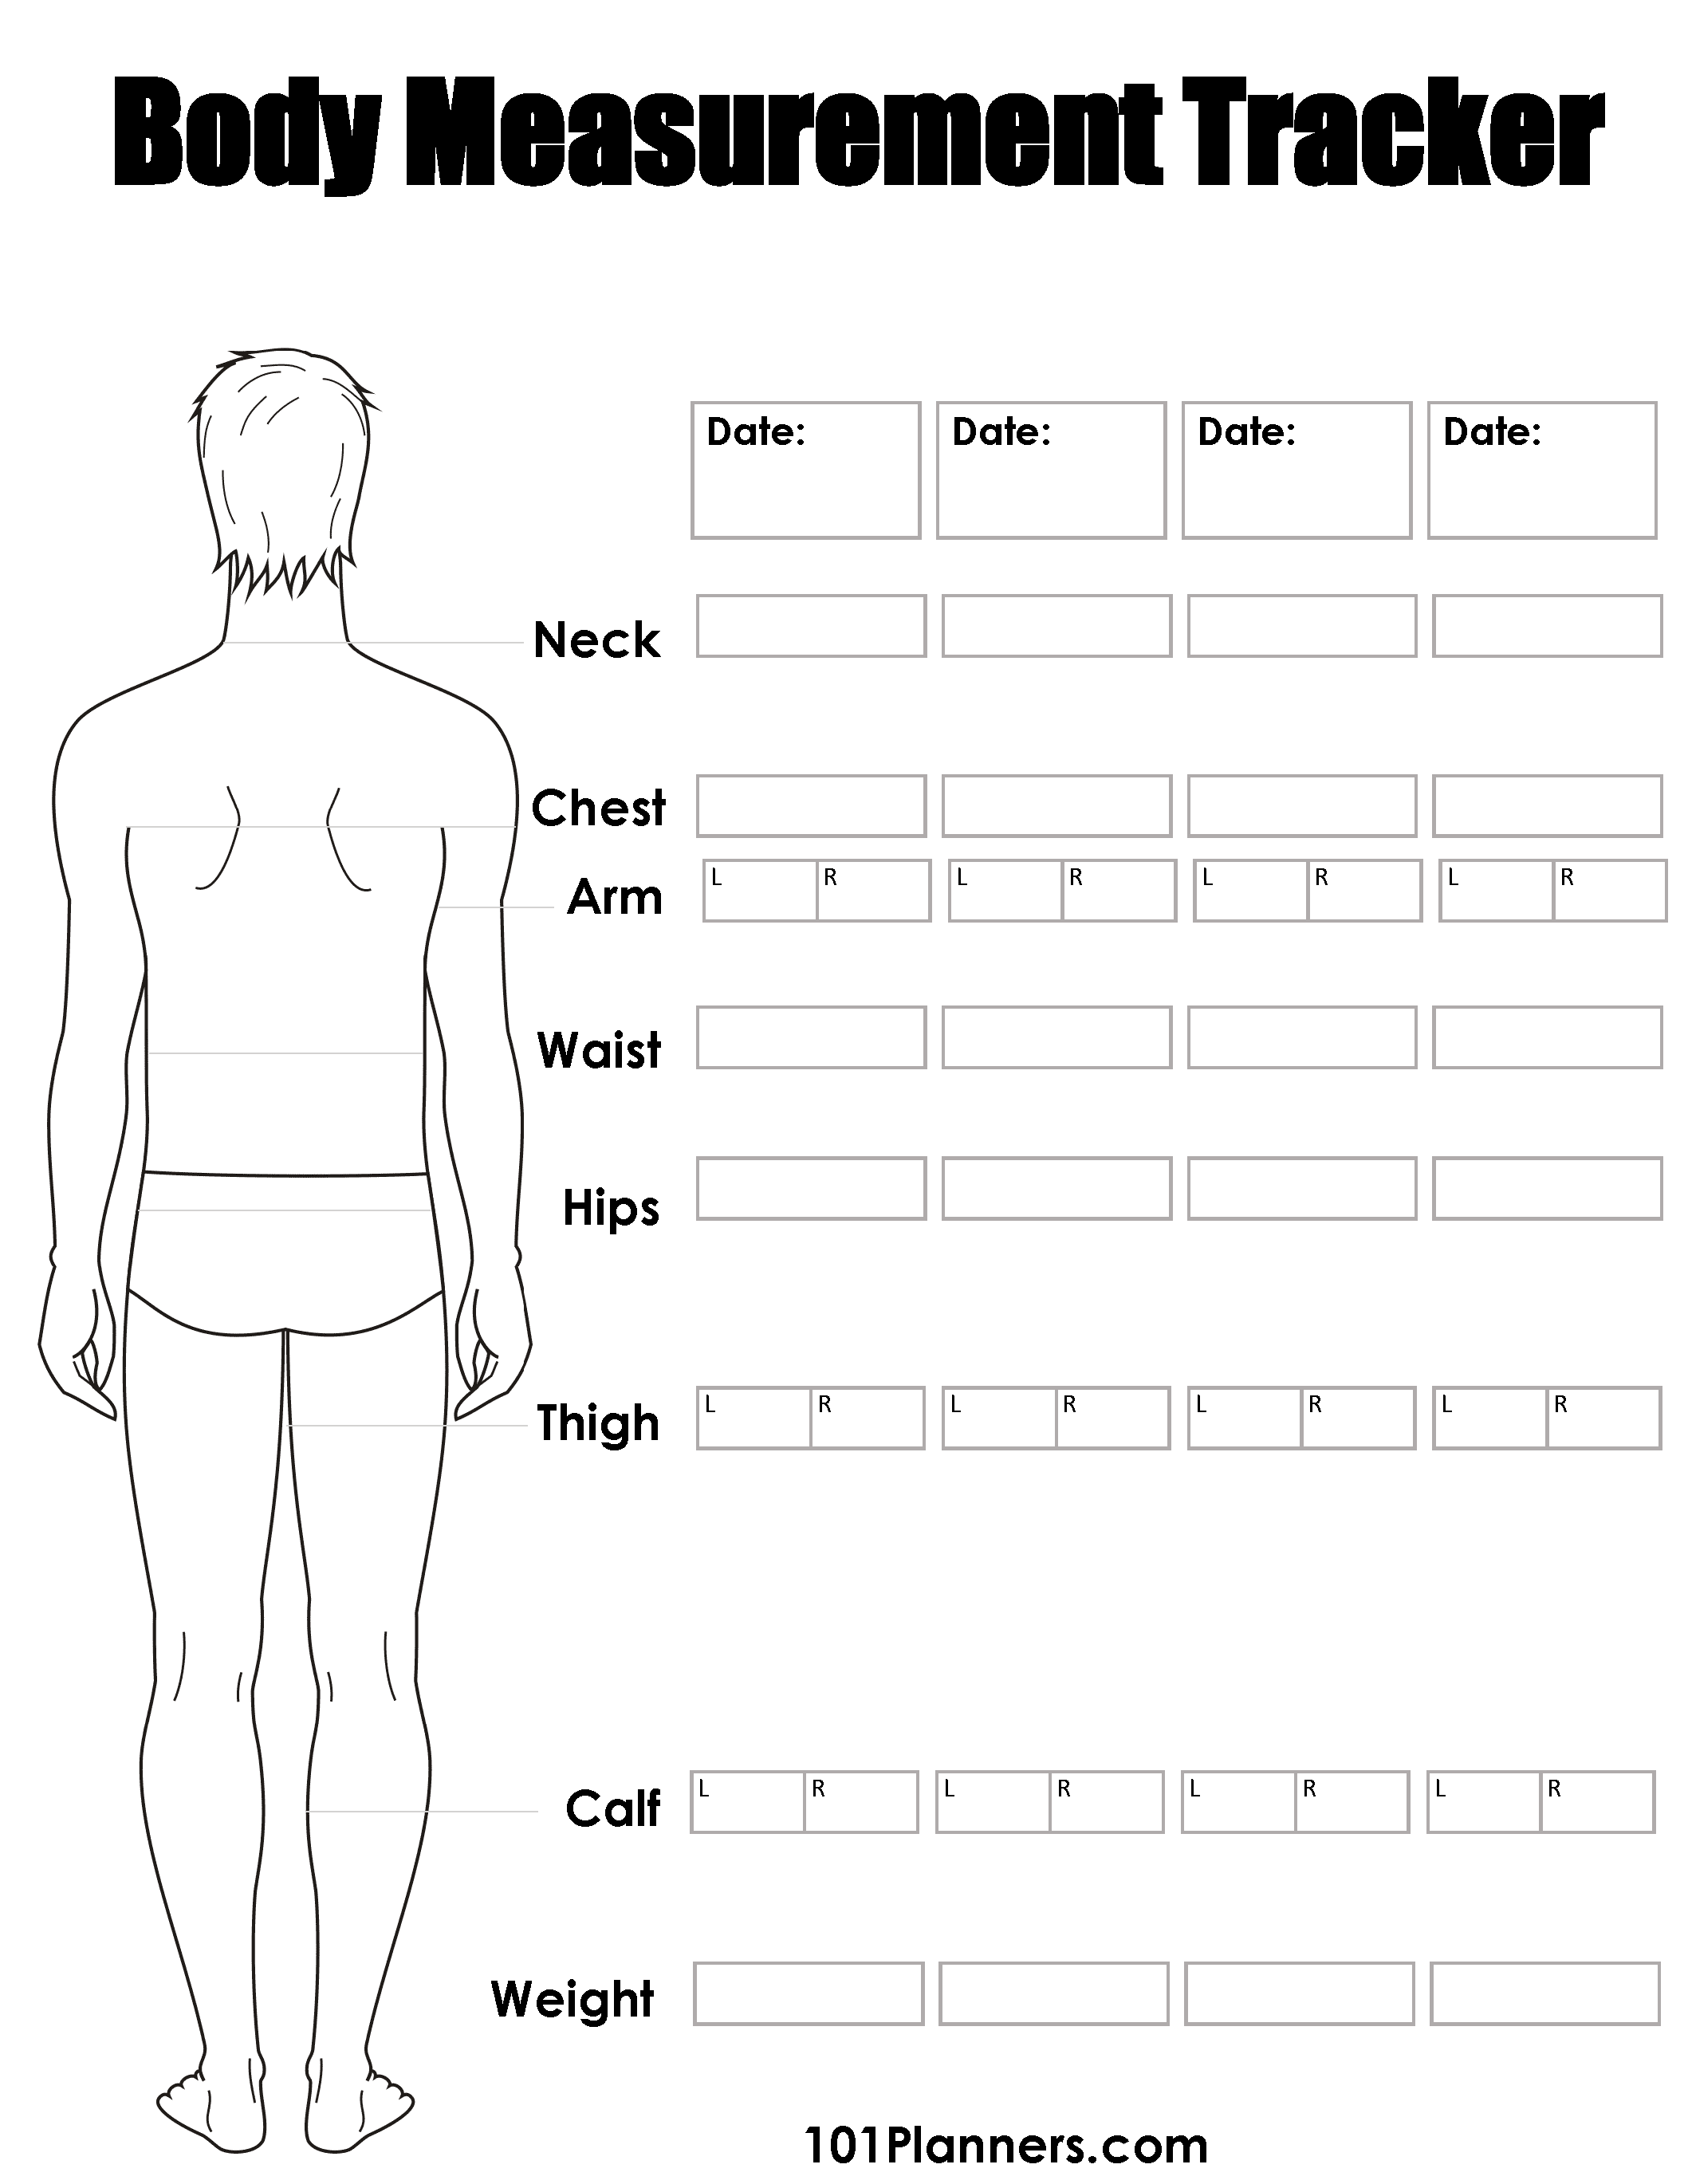 Female Body Measurement Chart, Template.net